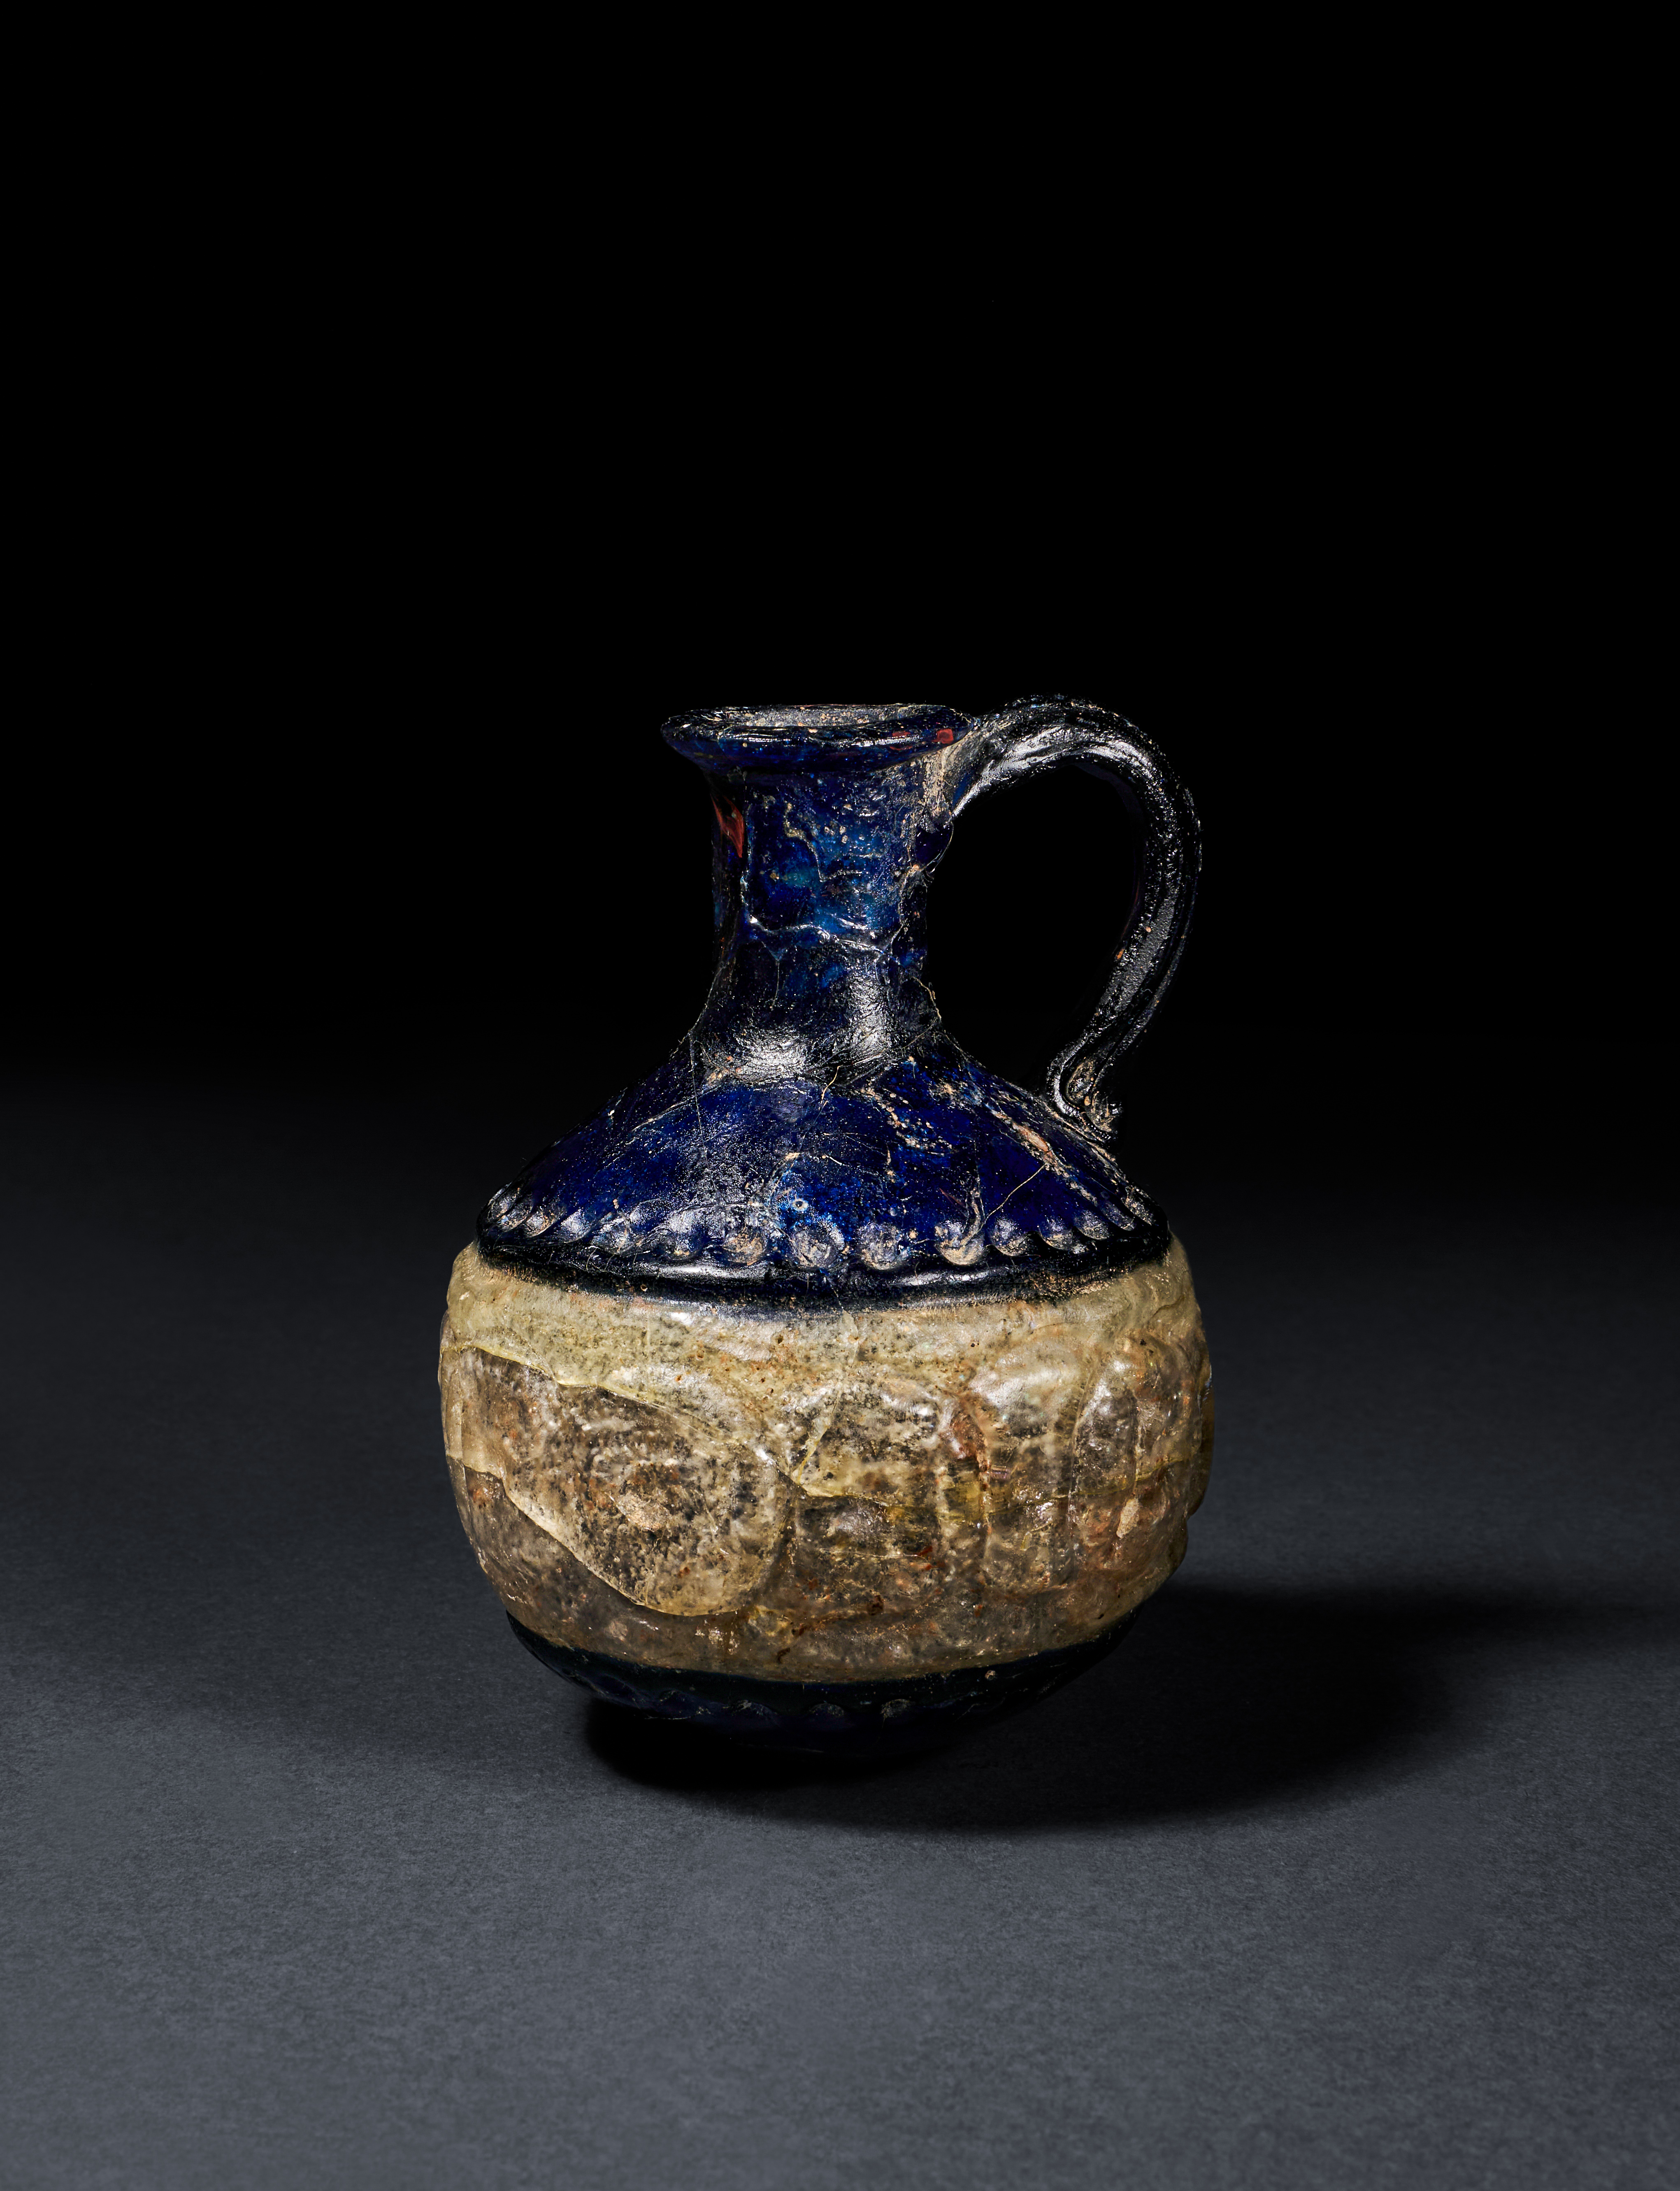 AN EARLY DOUBLE LAYERED ISLAMIC GLASS EWER, PROBABLY ABBASID, CIRCA 9TH CENTURY